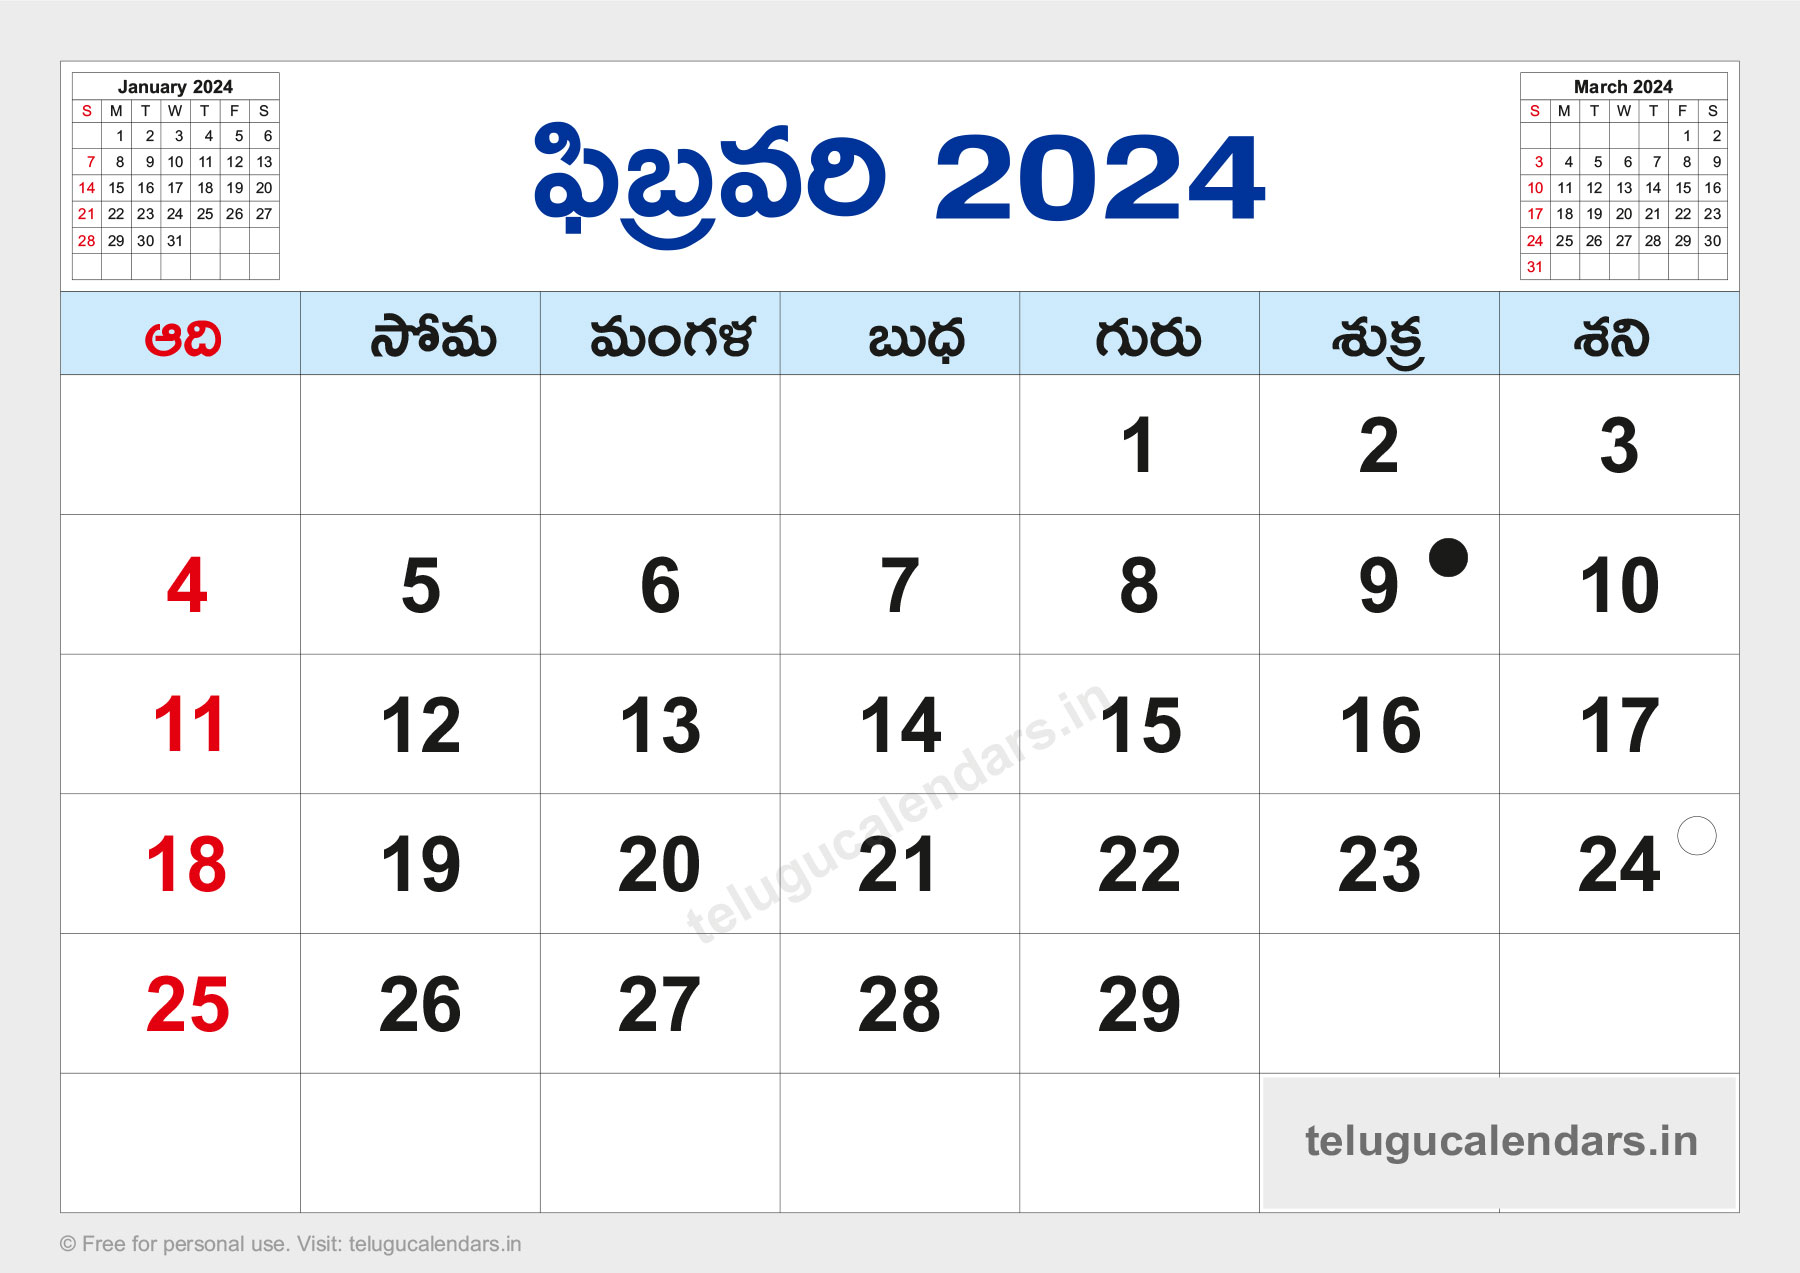 February 2024 Telugu Calendar Download Tilly Ginnifer